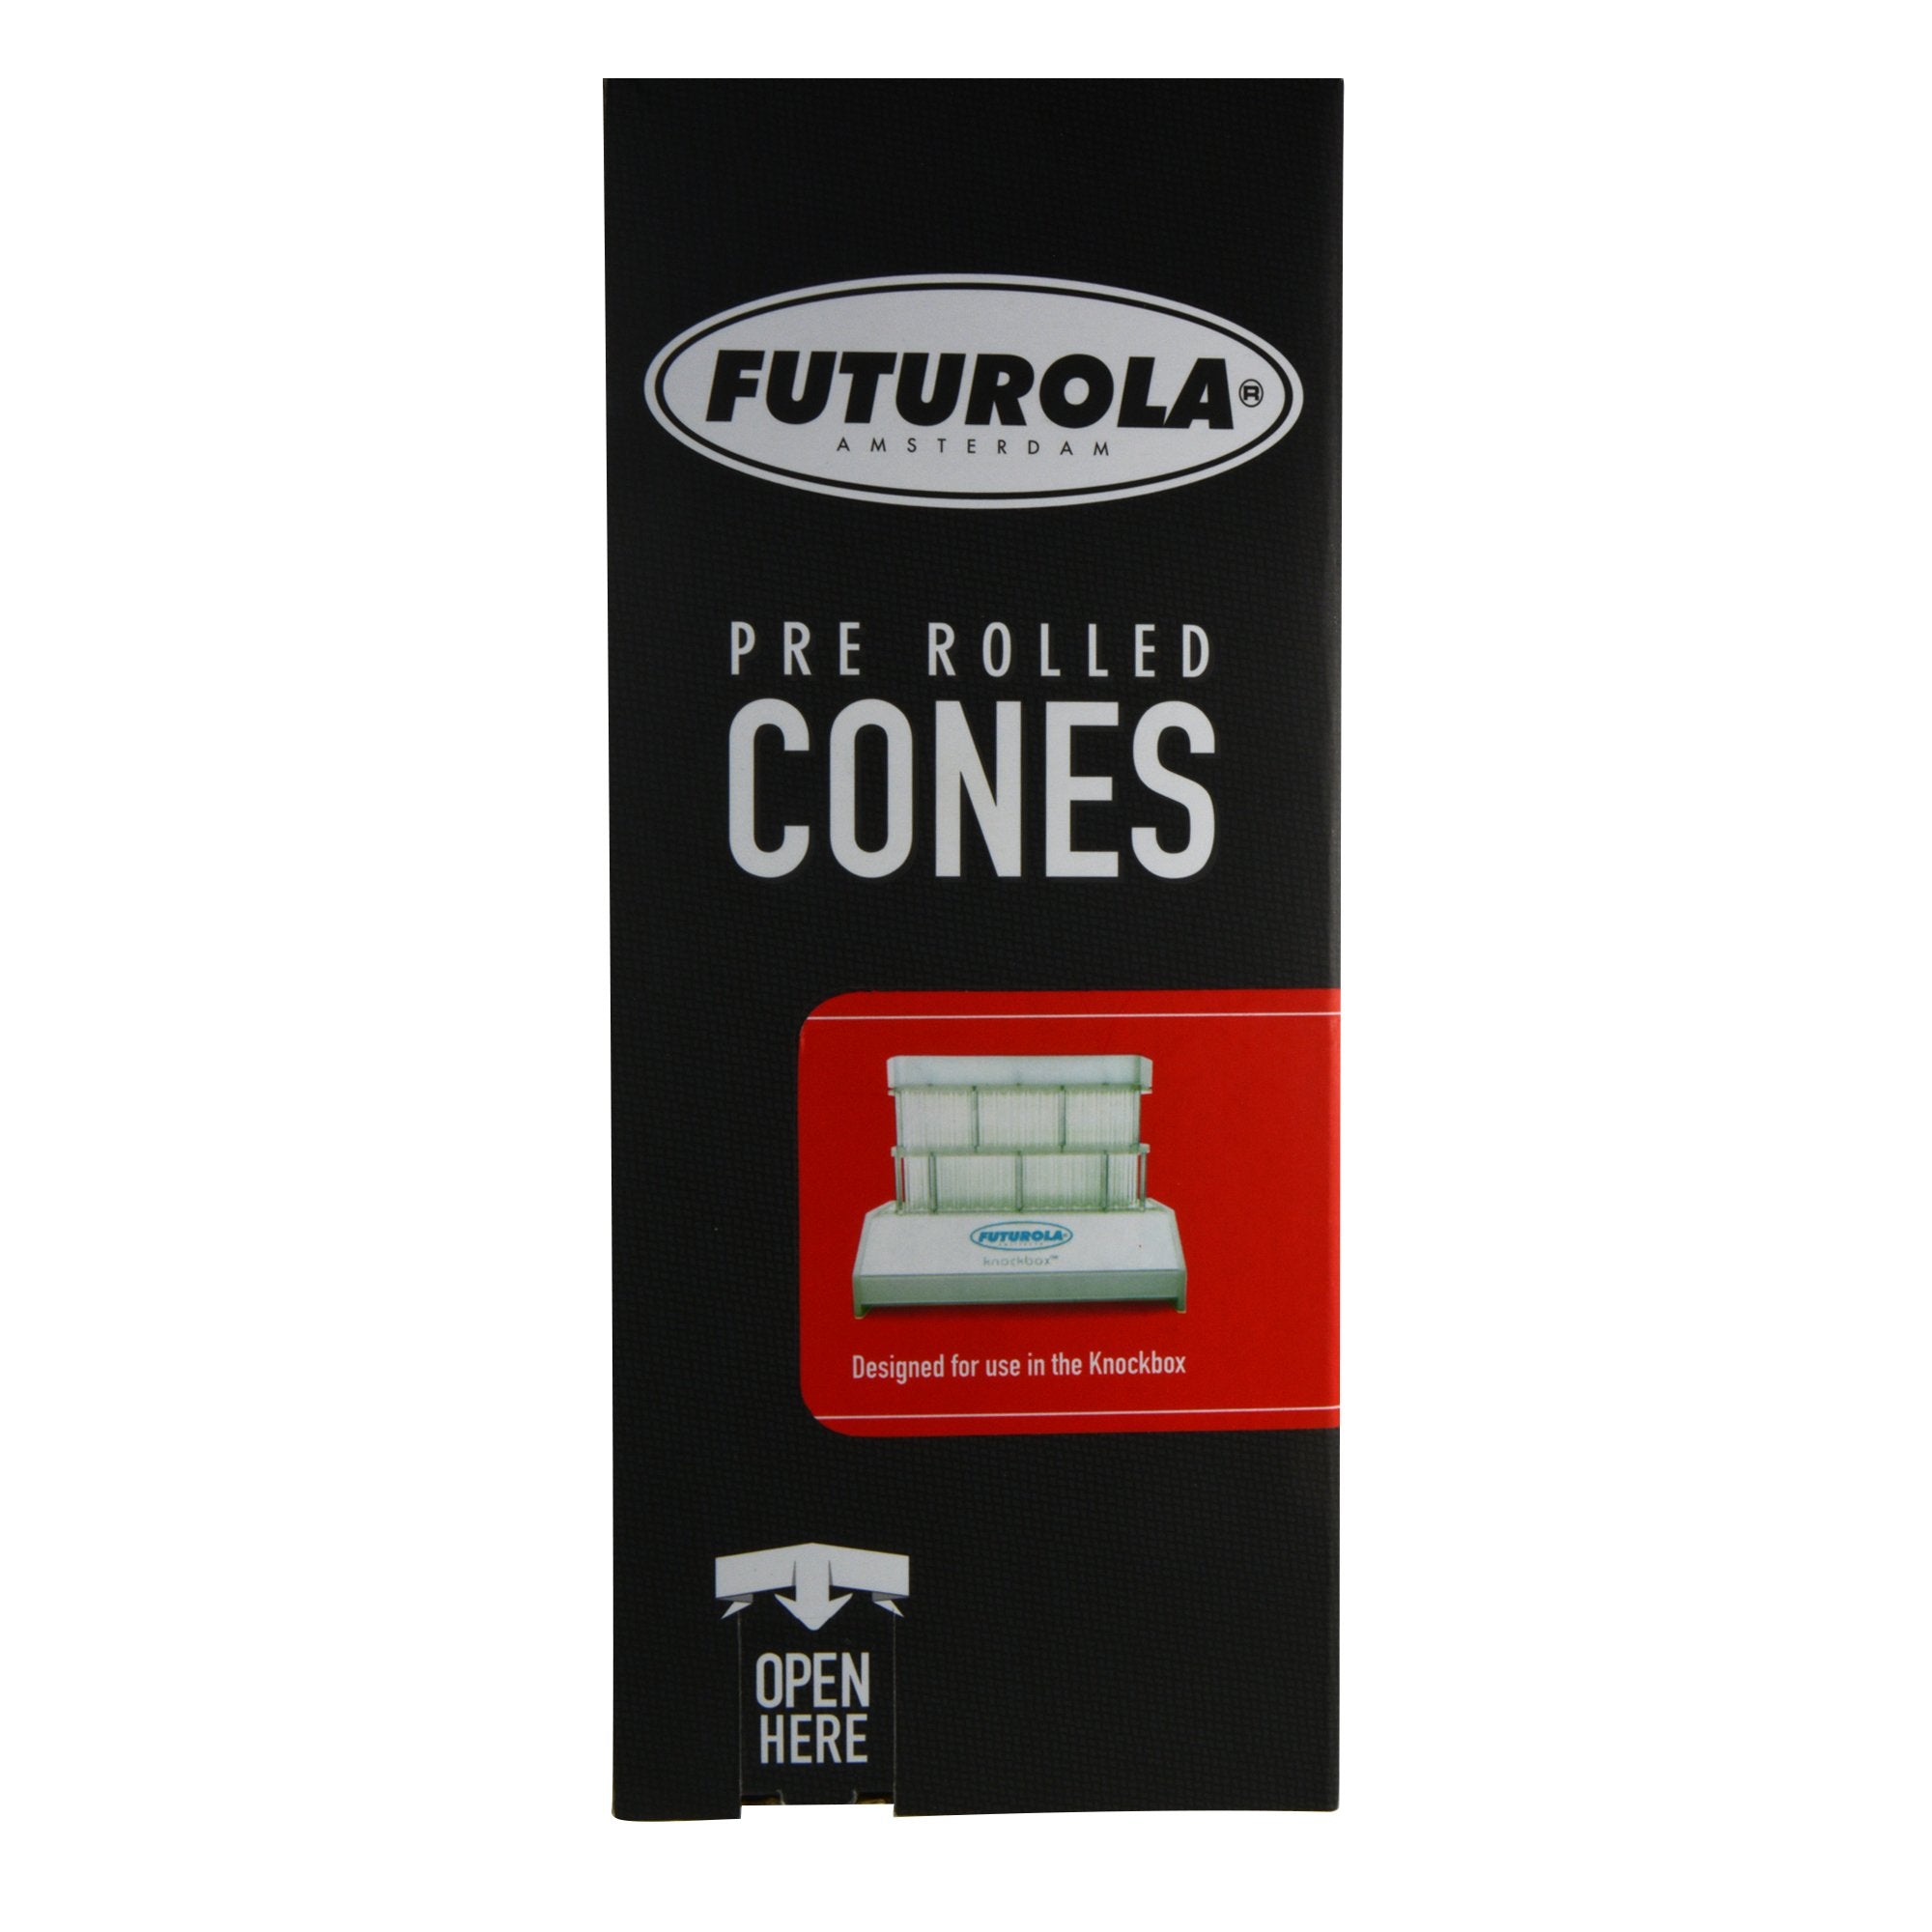 FUTUROLA | Reefer Size Pre-Rolled Cones | 98mm - Classic White Paper - 800 Count - 2